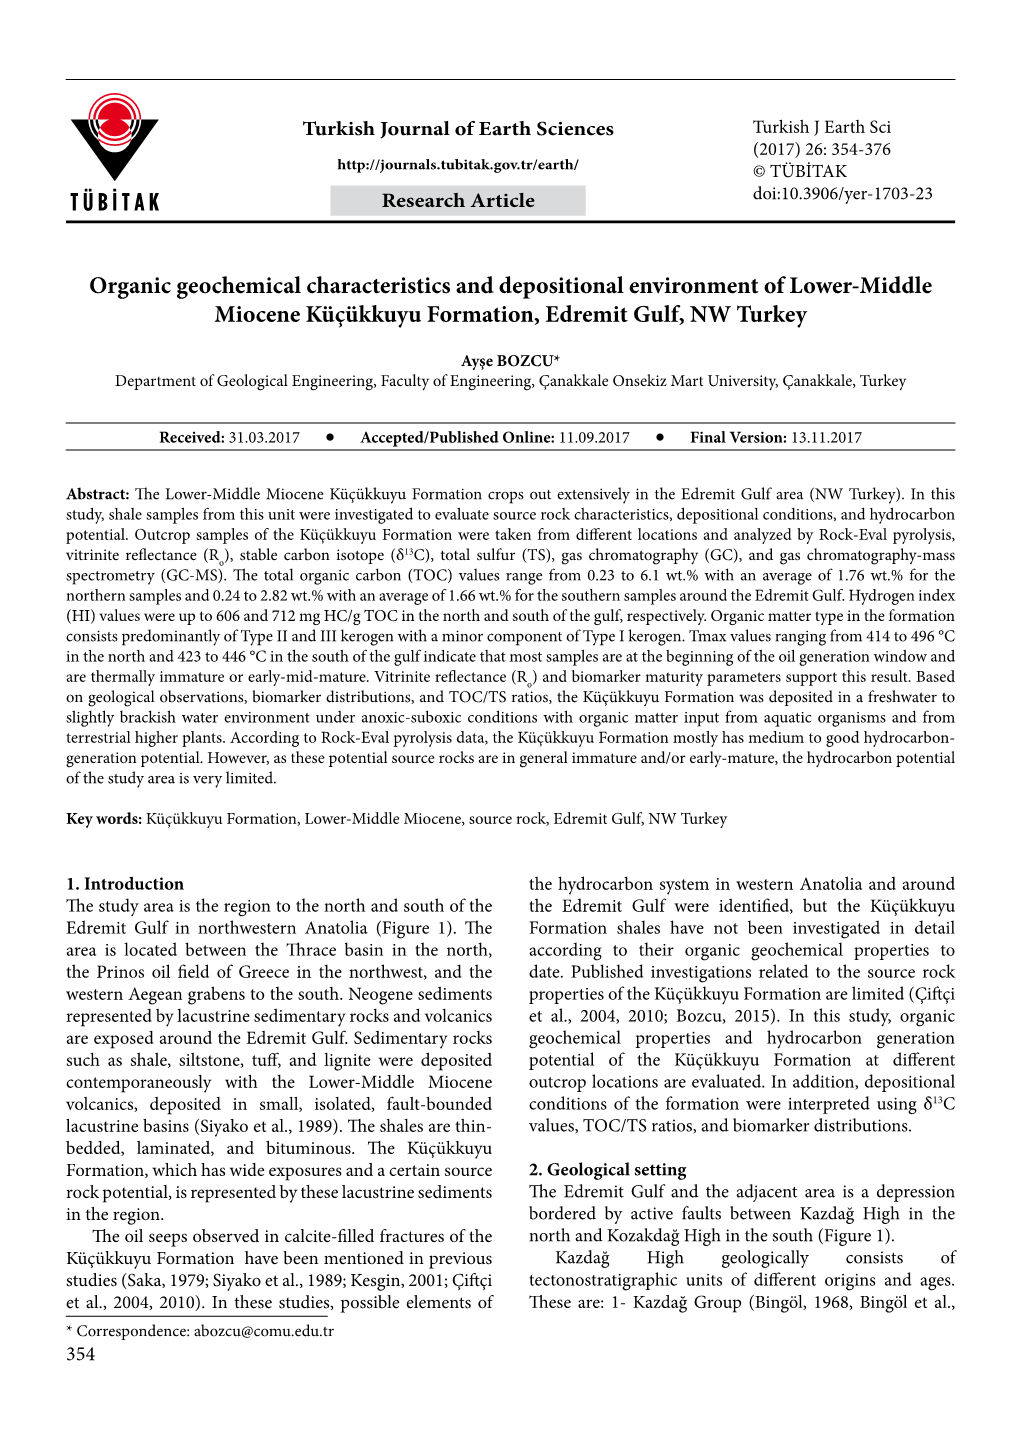 Organic Geochemical Characteristics and Depositional Environment of Lower-Middle Miocene Küçükkuyu Formation, Edremit Gulf, NW Turkey